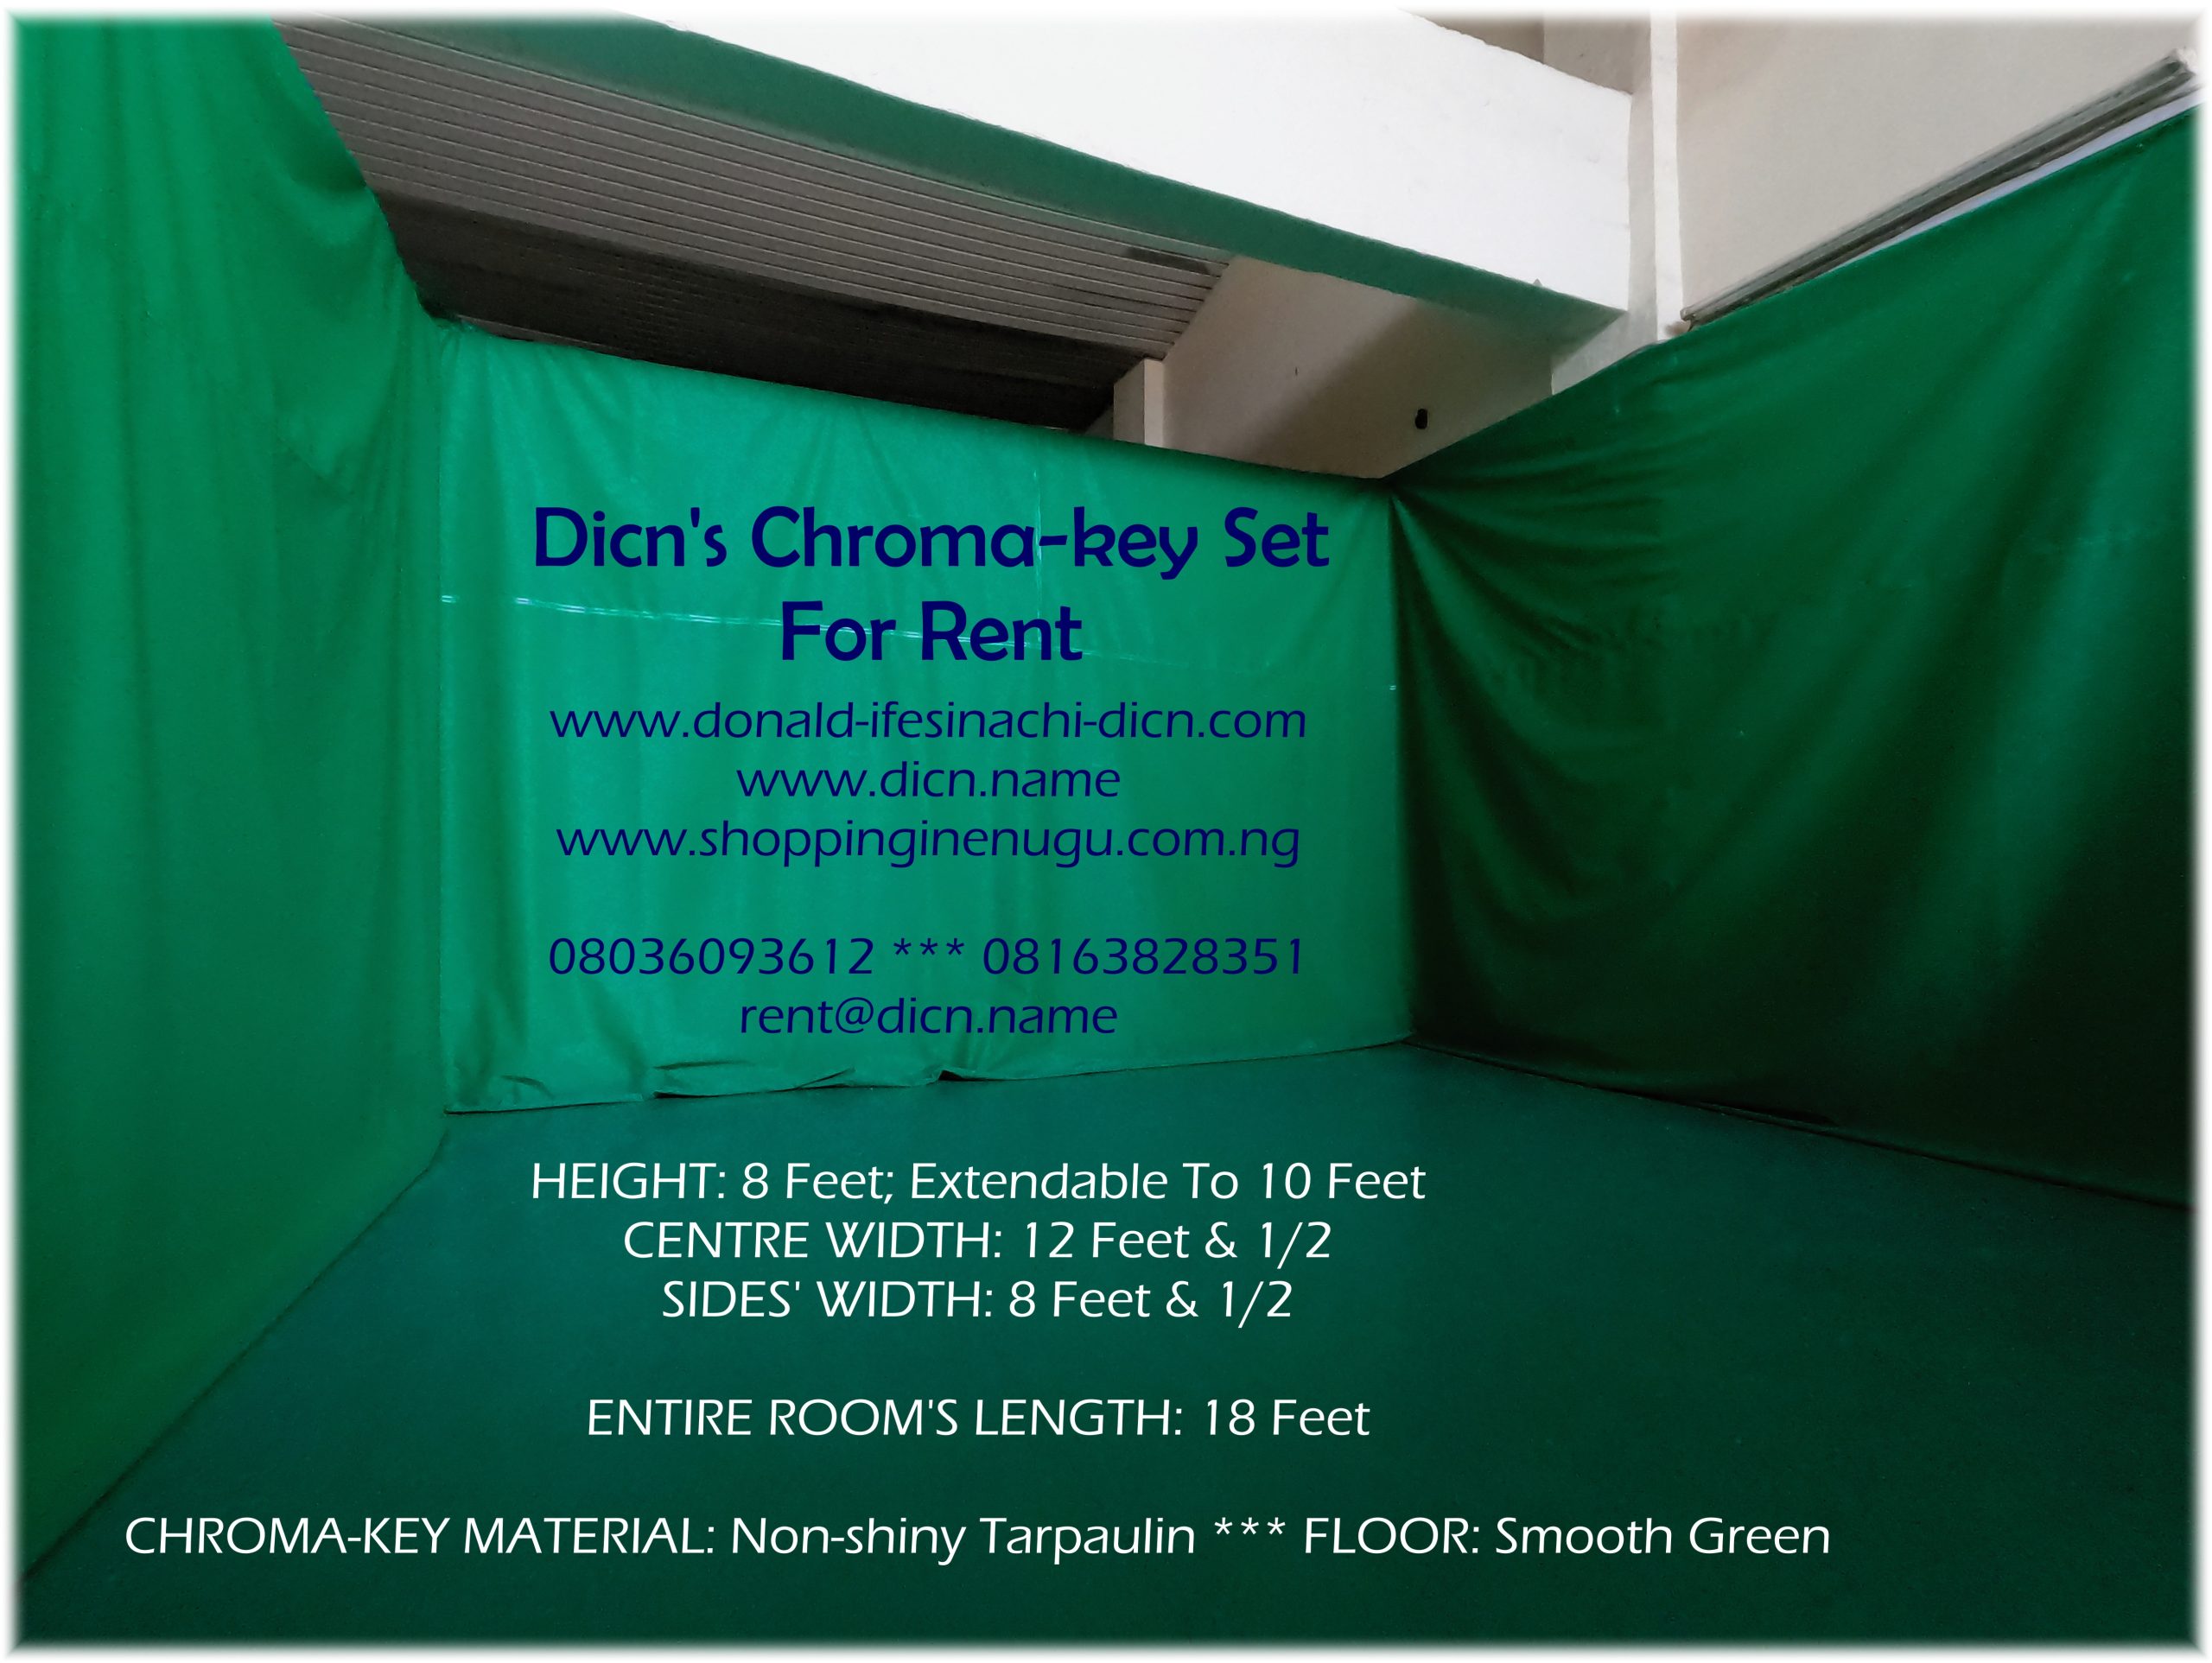 Video Or Photo Shoot Chroma-key Set For Rent At Enugu Stadium Complex- Dicn